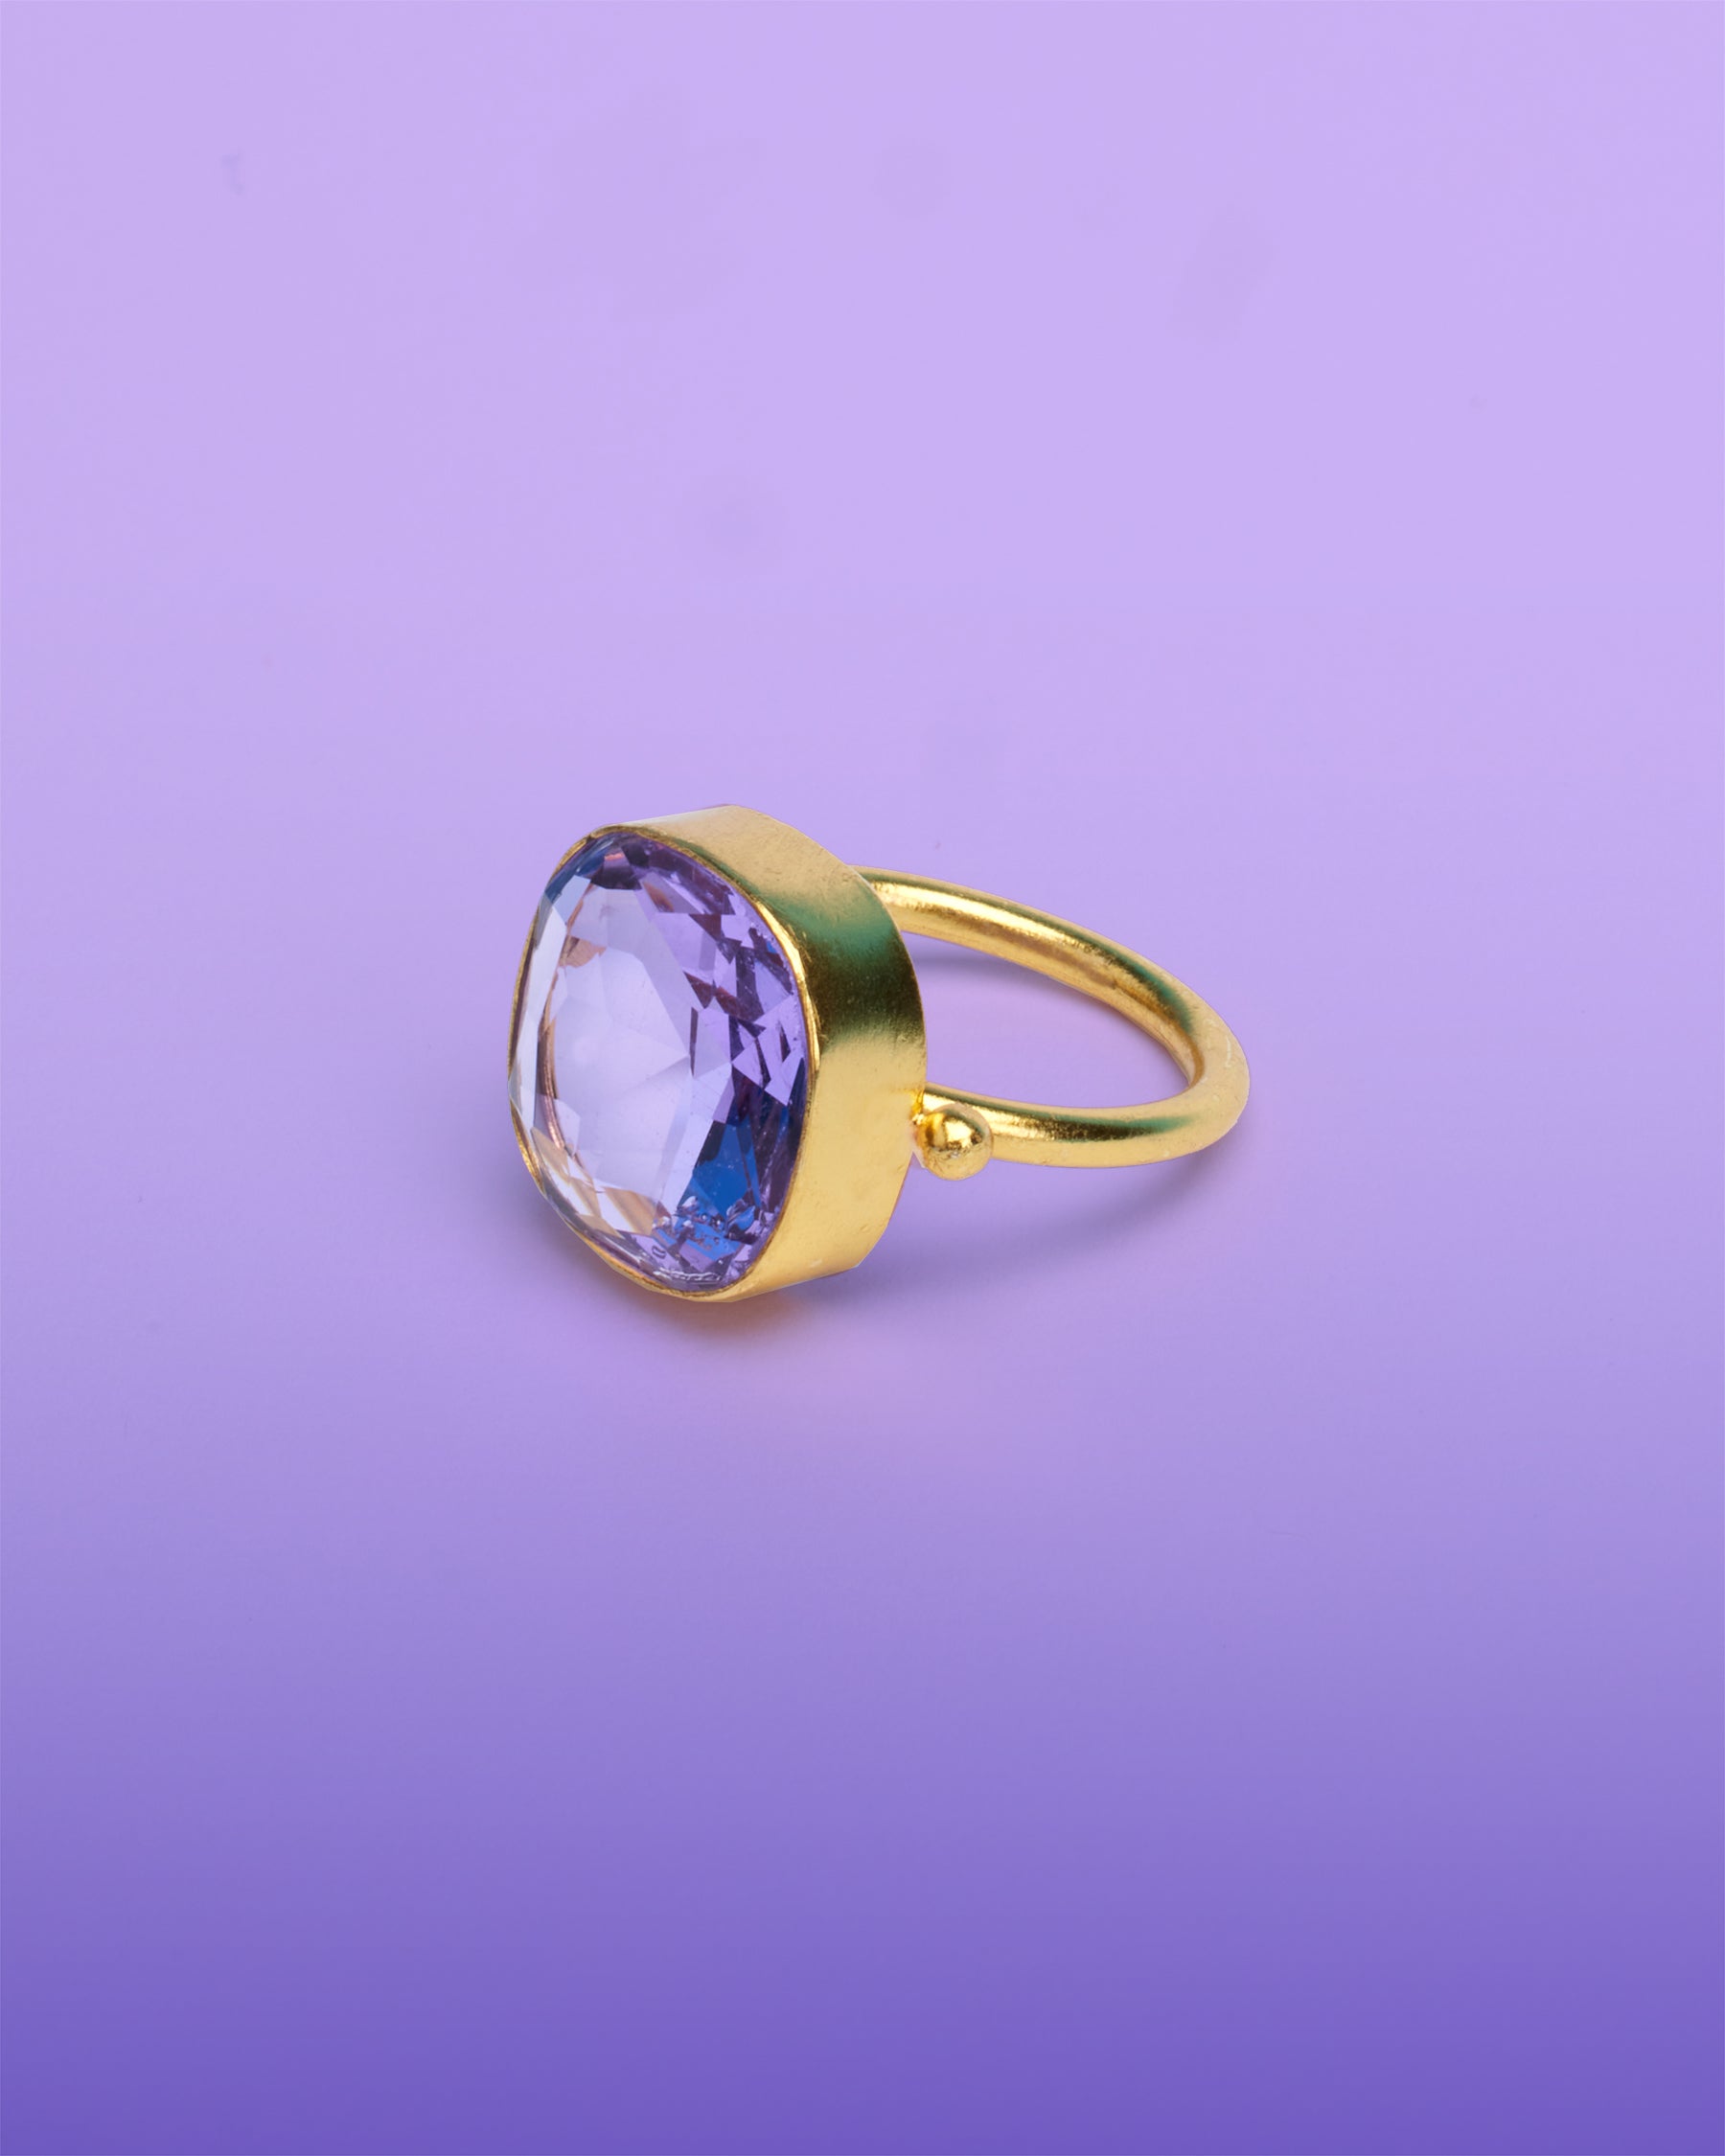 Darby Ring in Amethyst Lavender